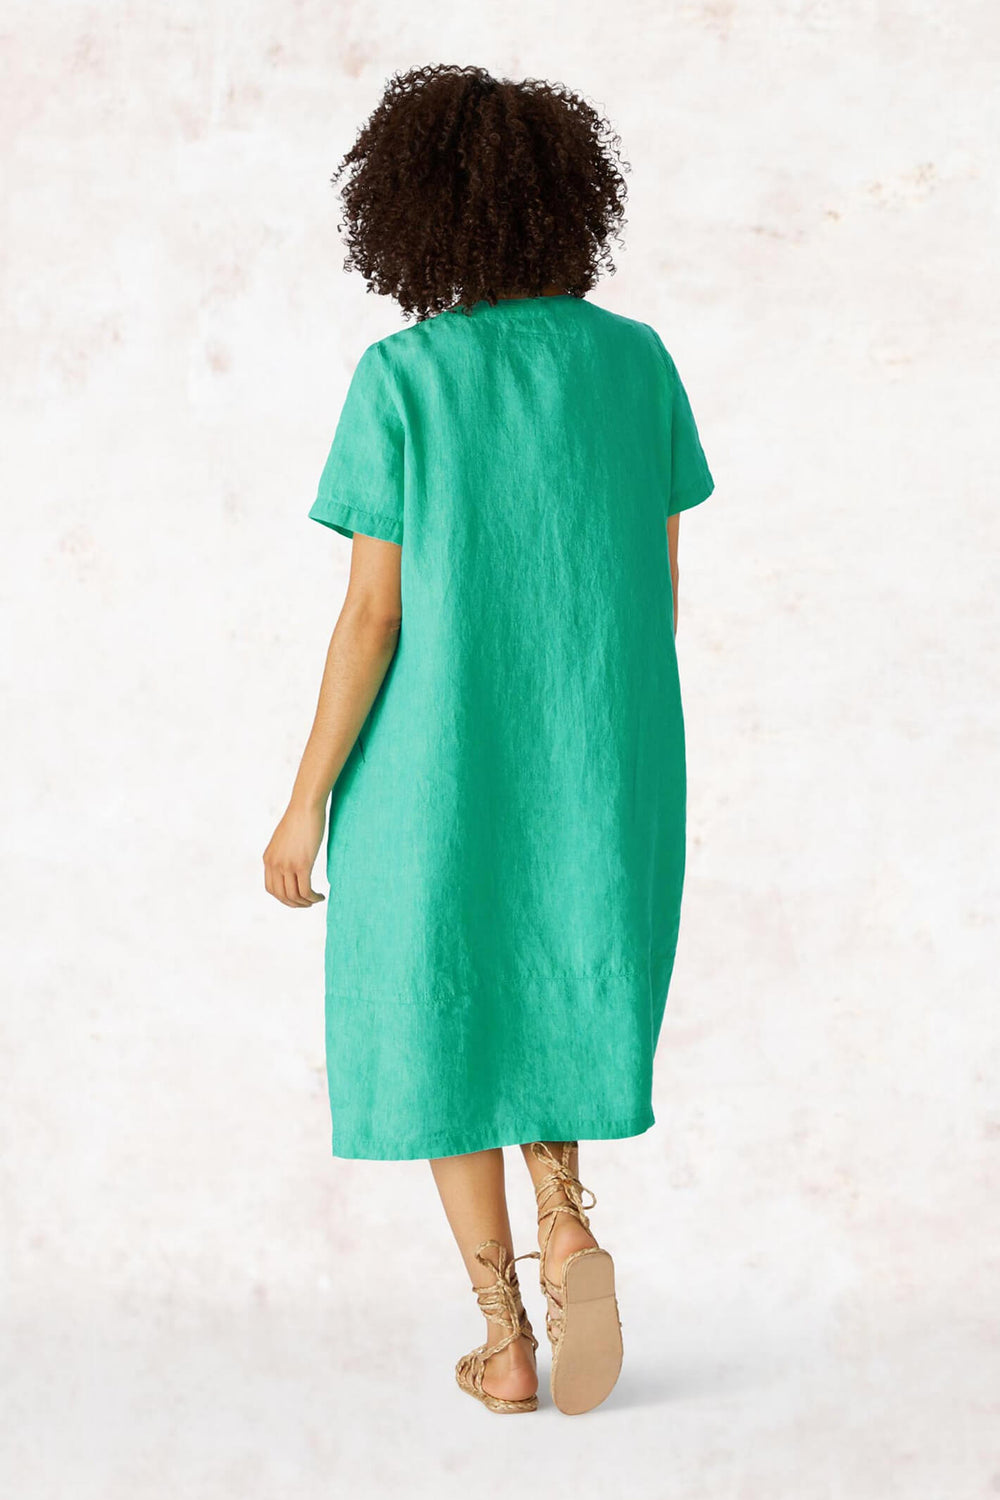 Sahara LAD360A-NCD Mint Cross Dye Linen Bubble Dress - Shirley Allum